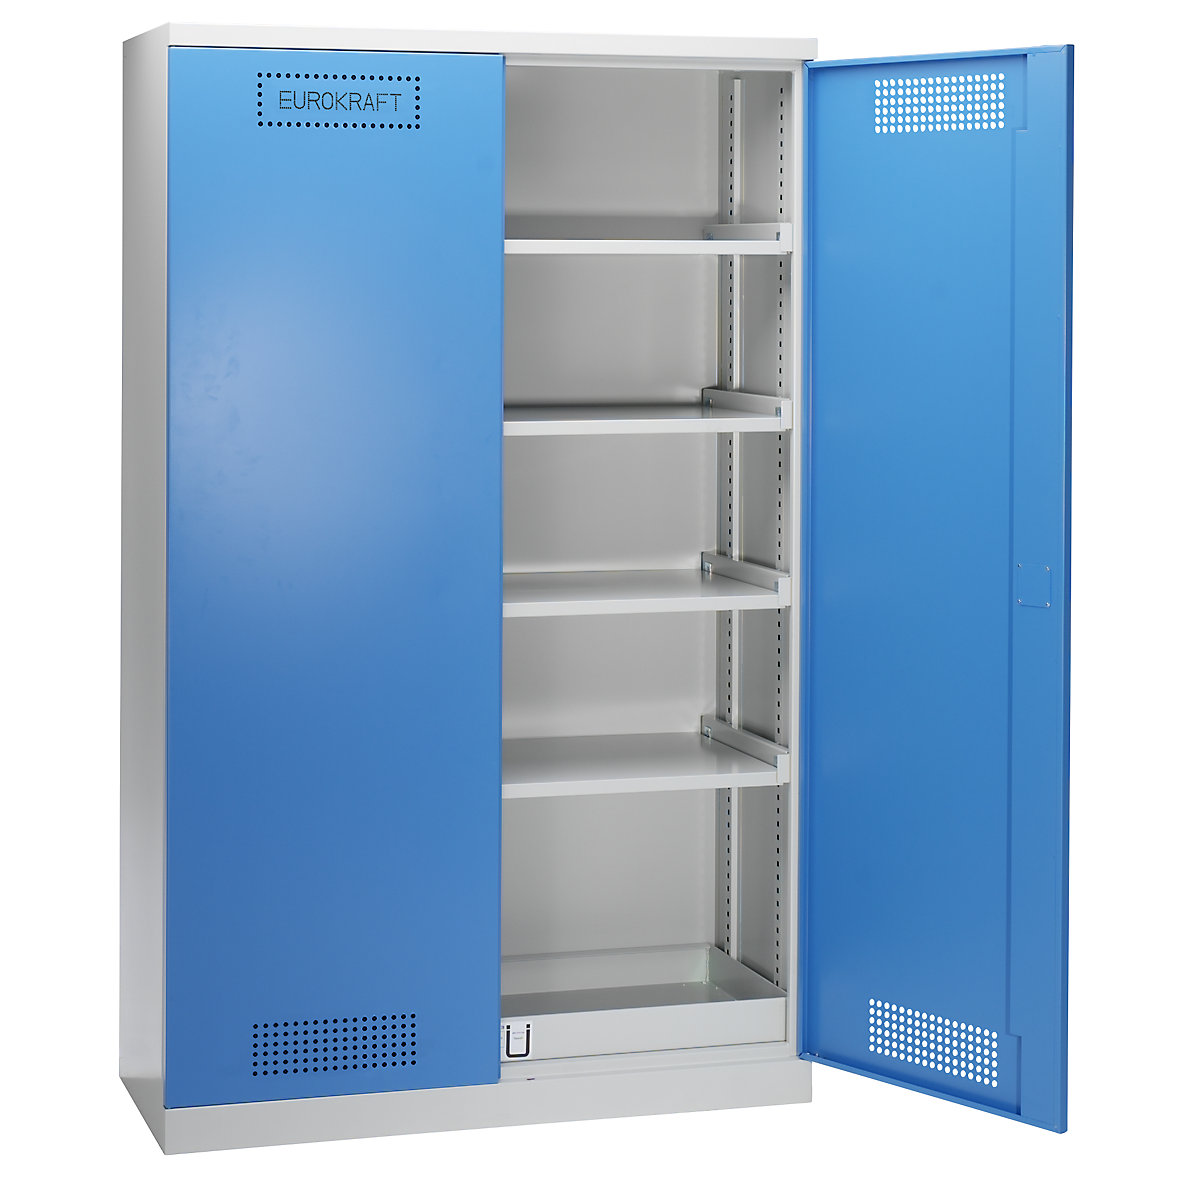 Environmental cupboard – eurokraft pro, base sump tray, 4 painted shelves, HxWxD 1950 x 1200 x 500 mm